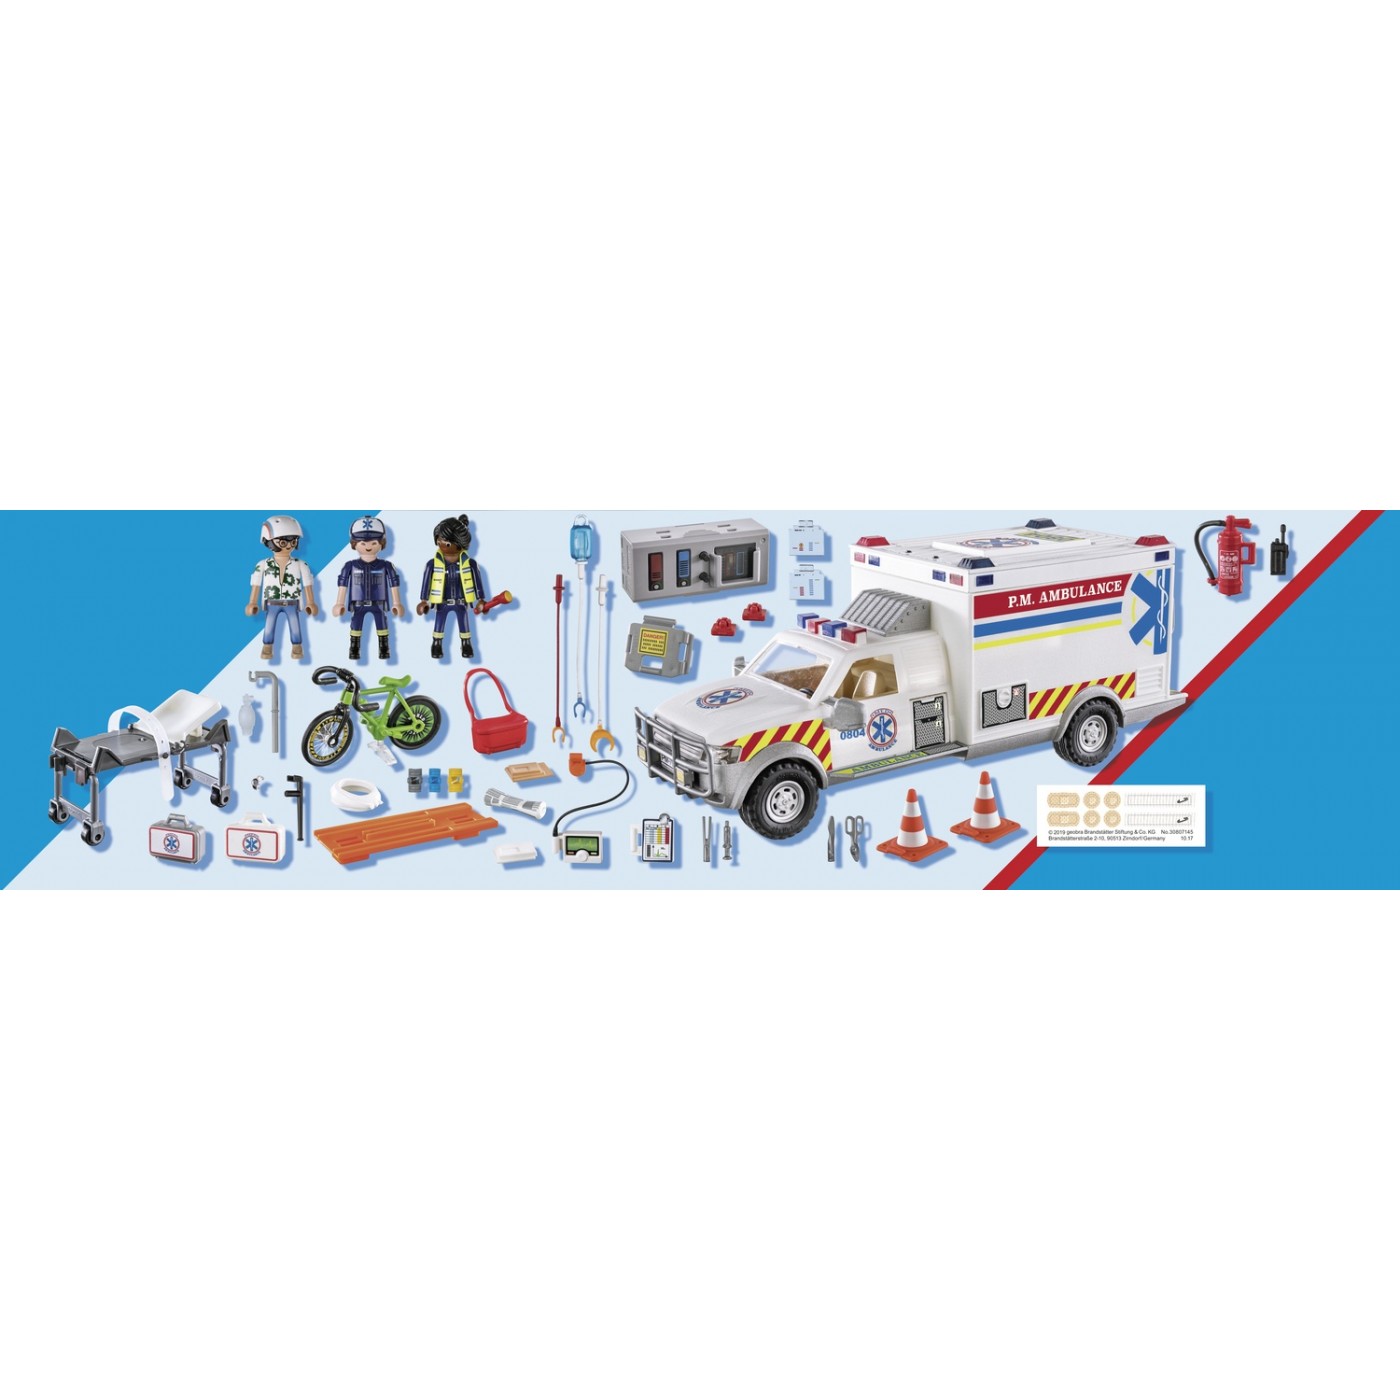 Playmobil City Action US Ambulance: Όχημα Πρώτων Βοηθειών 70936 - Playmobil, Playmobil City Action